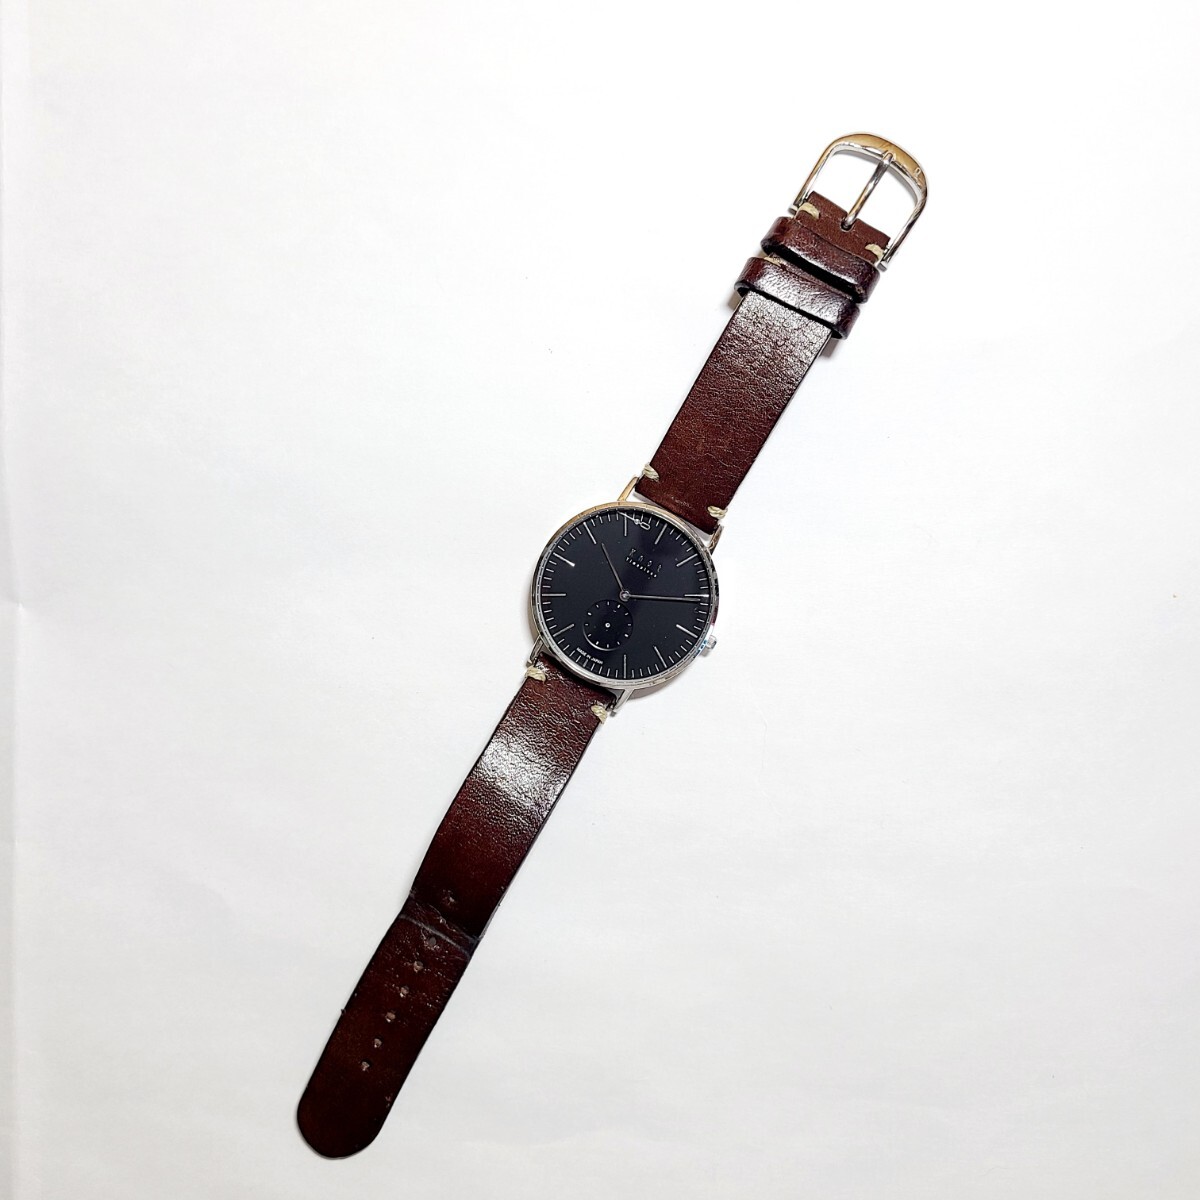 CM171LL 日本製 Knot ノット CS-36 腕時計 リストウォッチ スモールセコンド ブラック文字盤 栃木レザー 革ベルト クォーツ _画像2